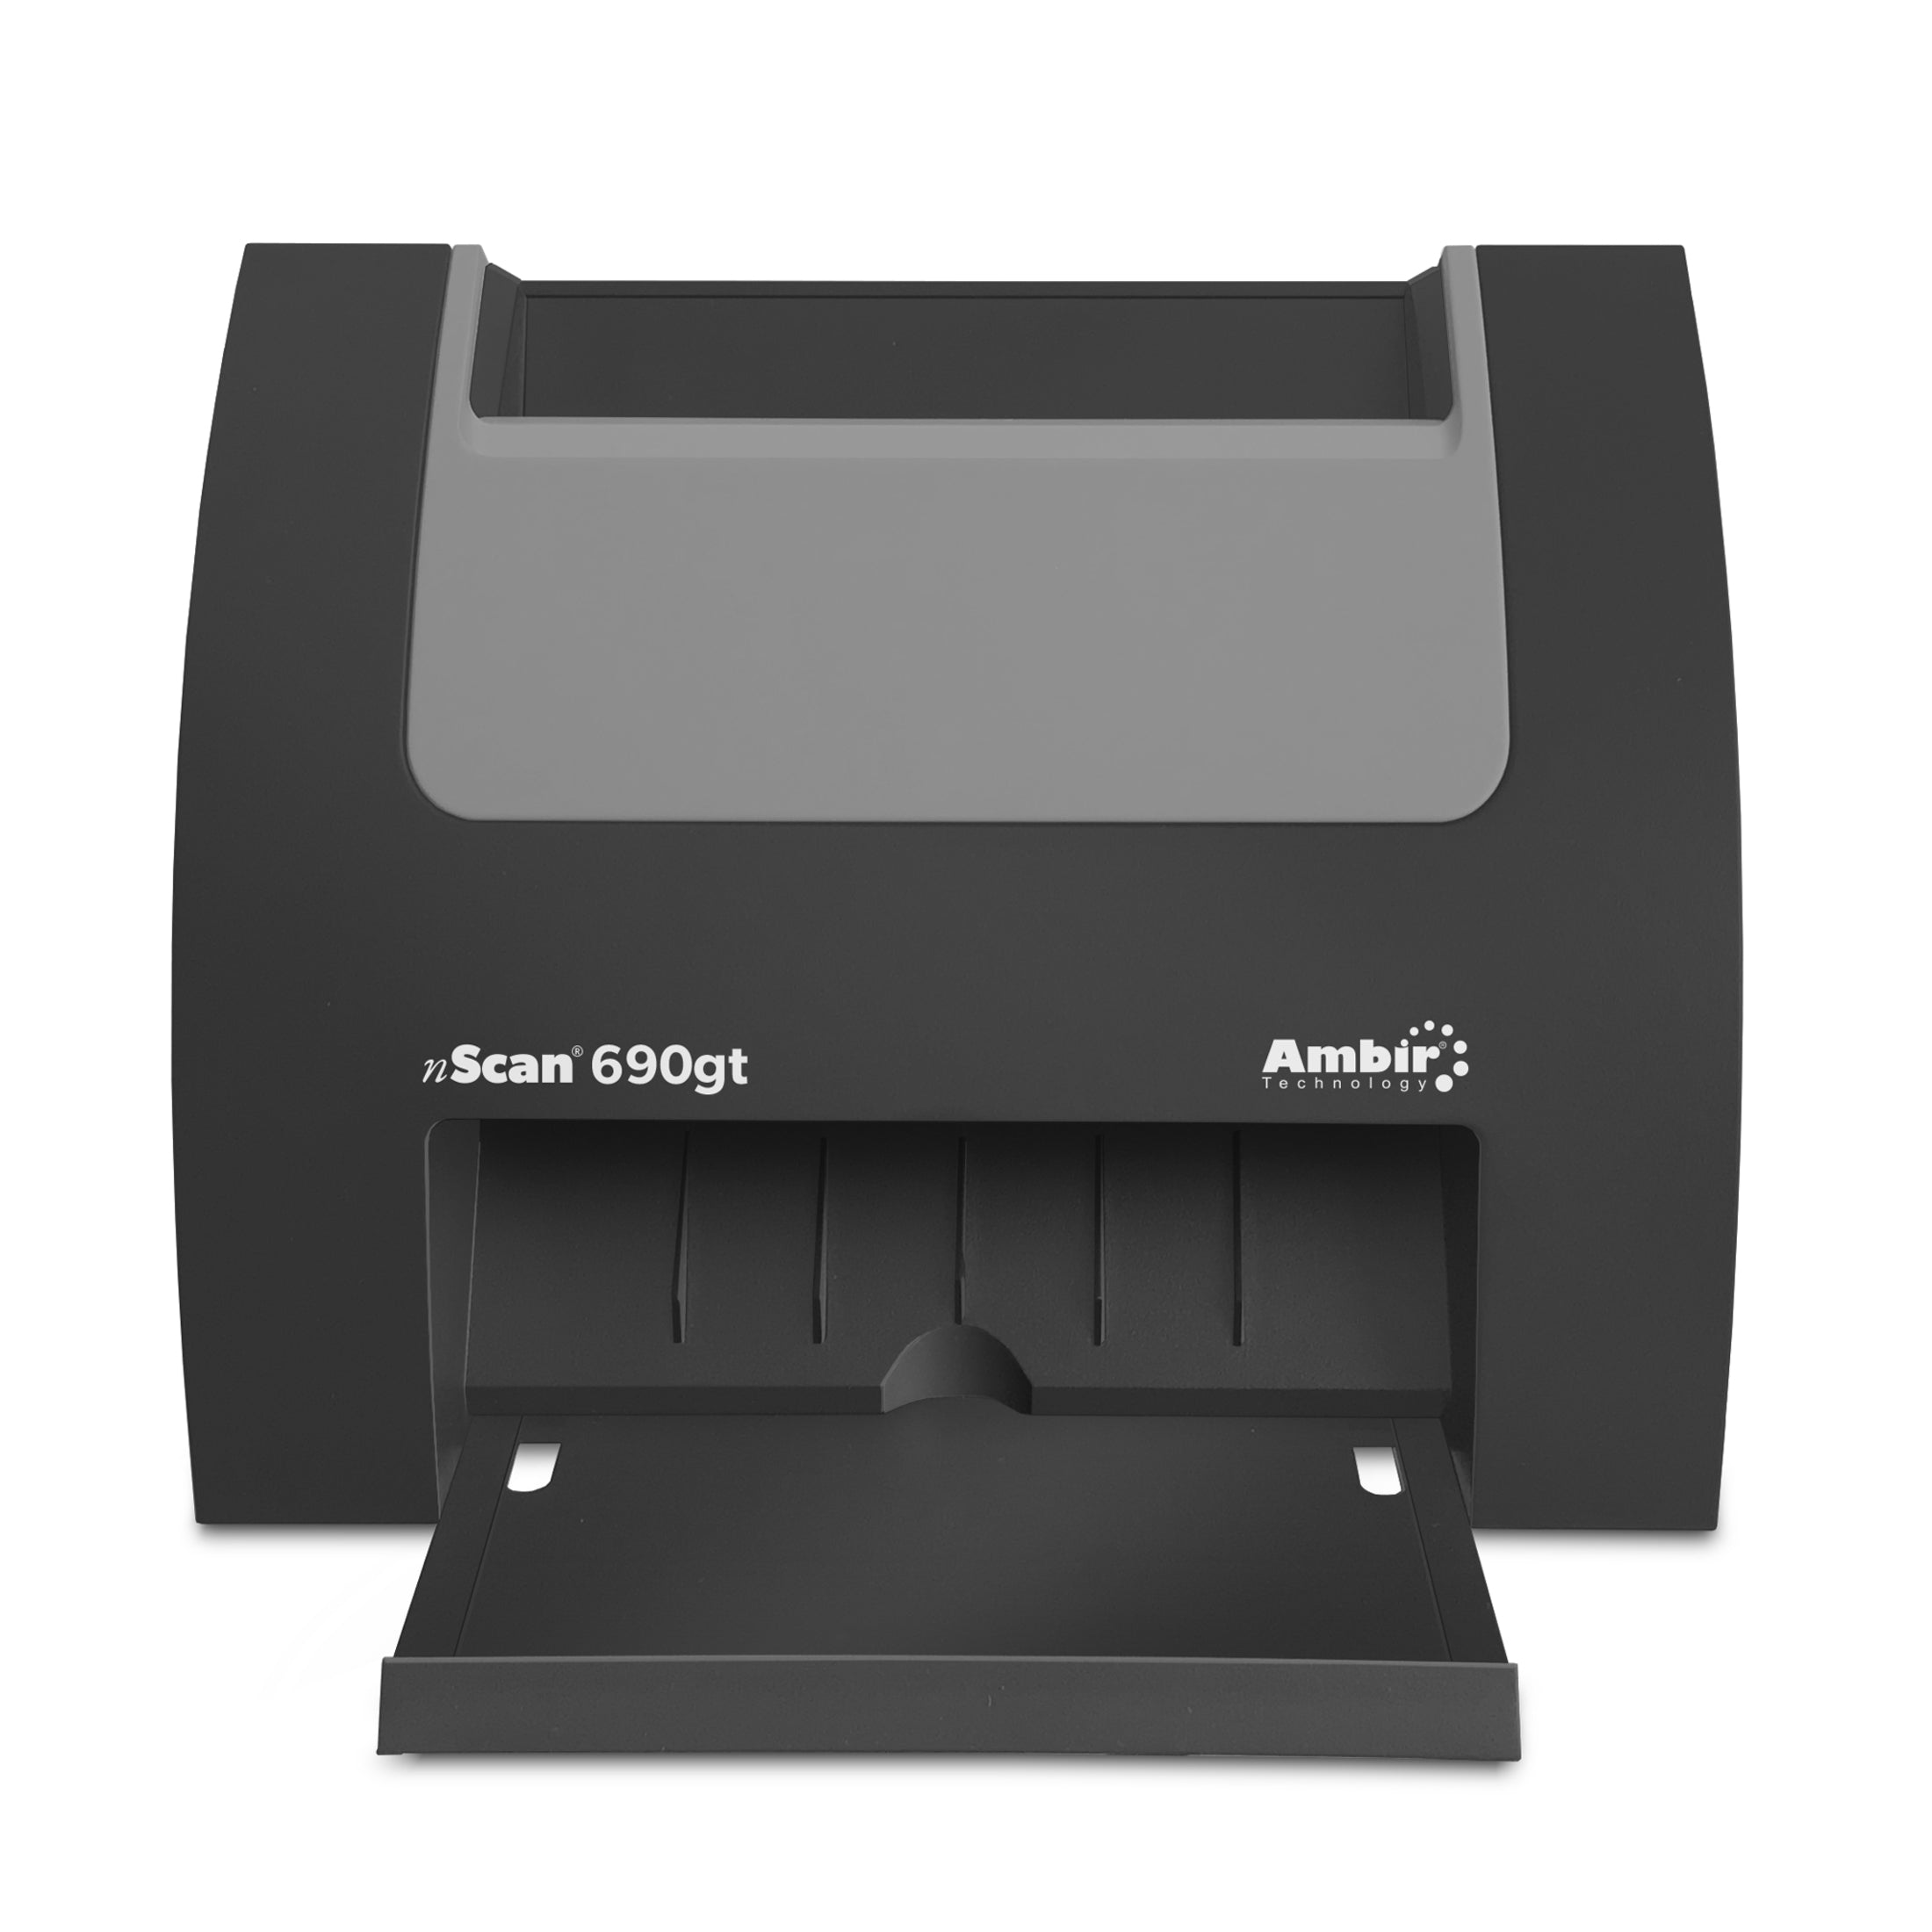 Ambir DS690GT-BCS nScan 690gt High-Speed Vertical Card Scanner, Duplex Scanning, Windows Compatible